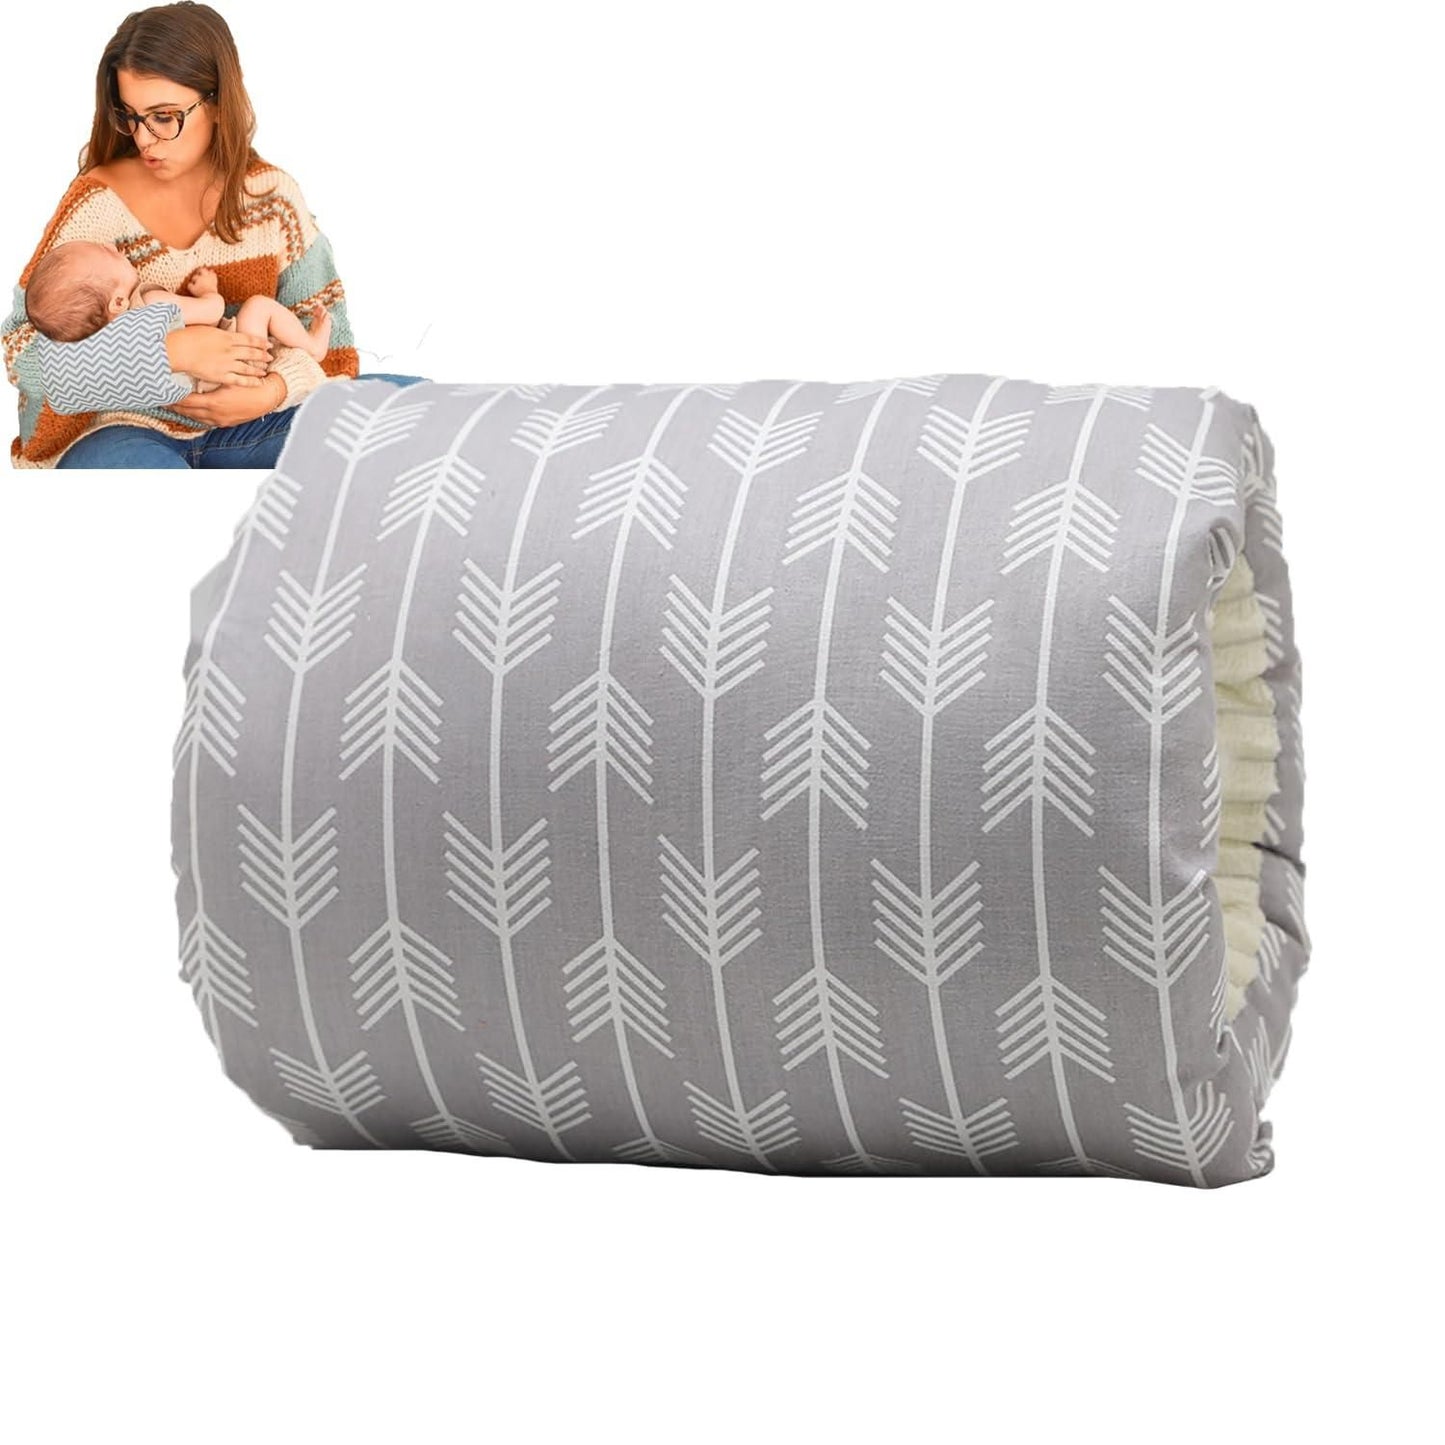 MamaHug Baby Feeding Support Pillow